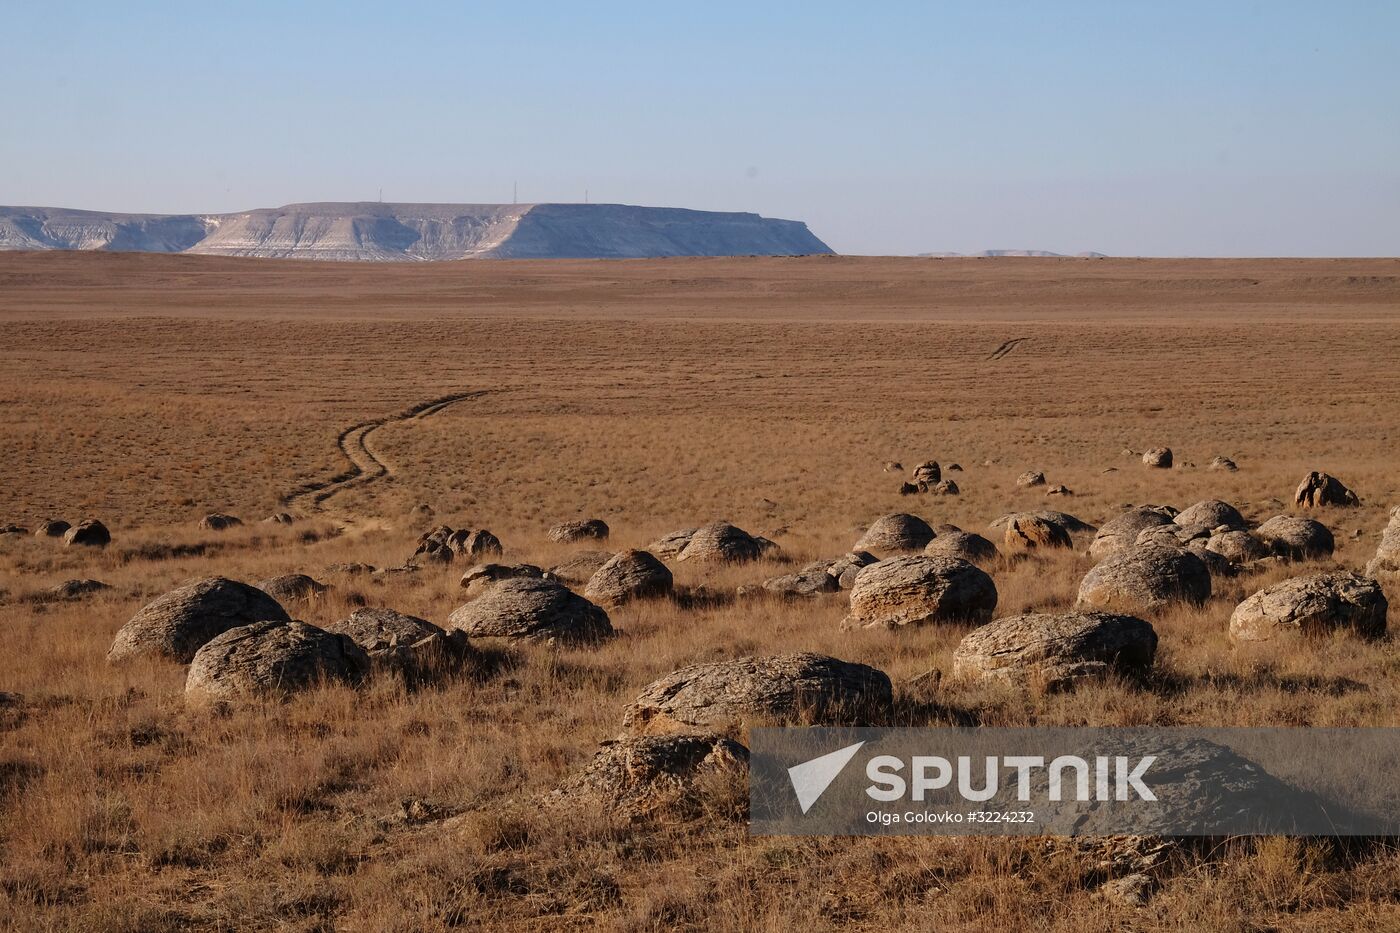 Valley of balls (Torysh) in Kazakhstan